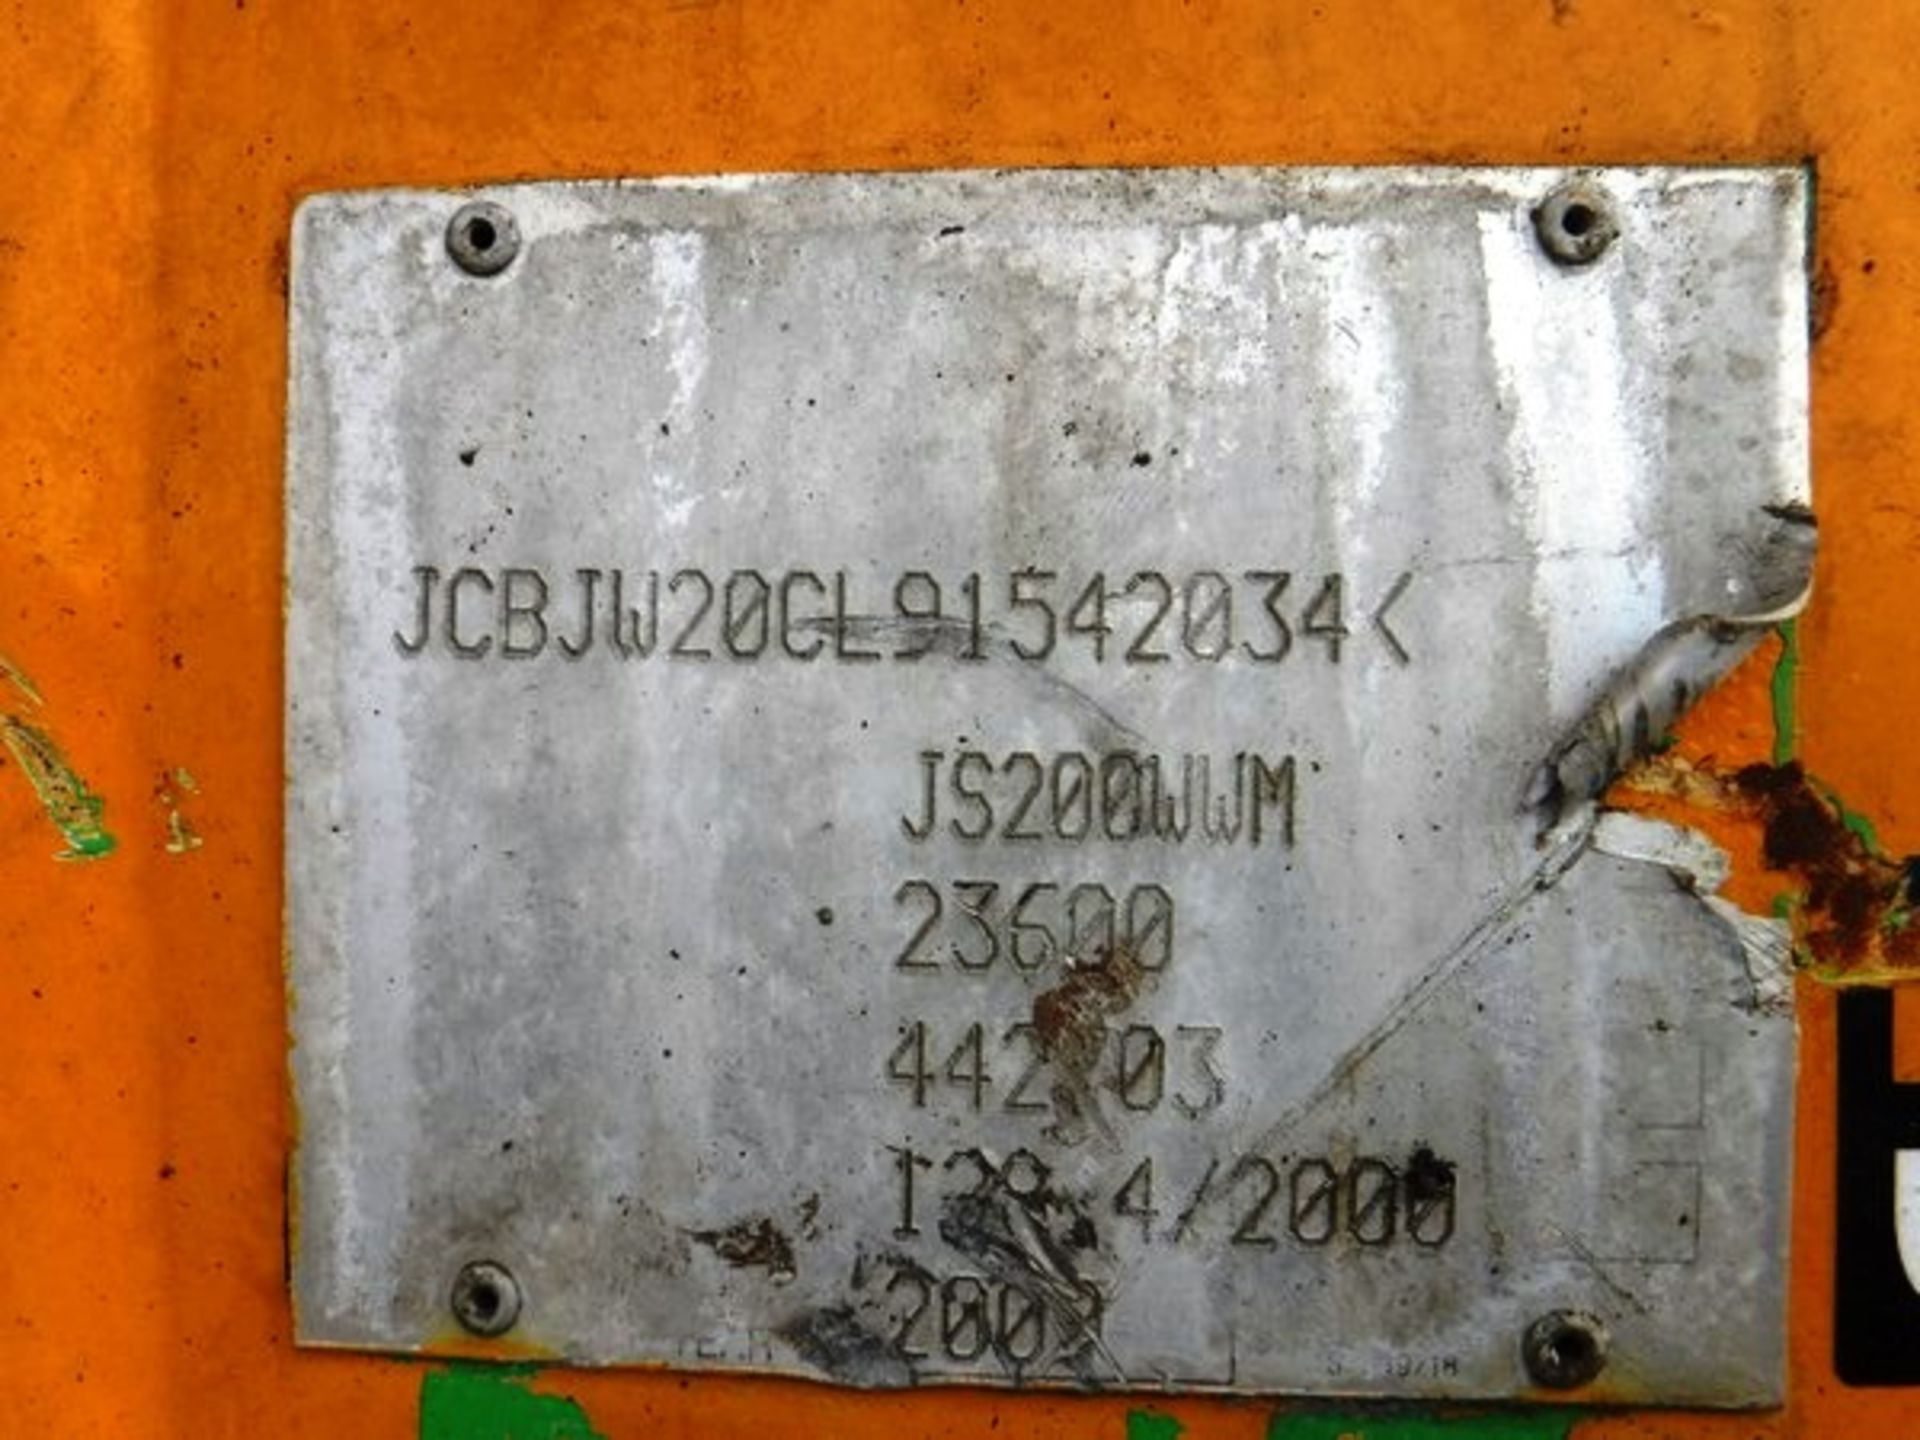 2009 JCB JS 200W wheeled excavator s/n JCBJW200L91542034. 11518hrs (not verified) - Image 30 of 30